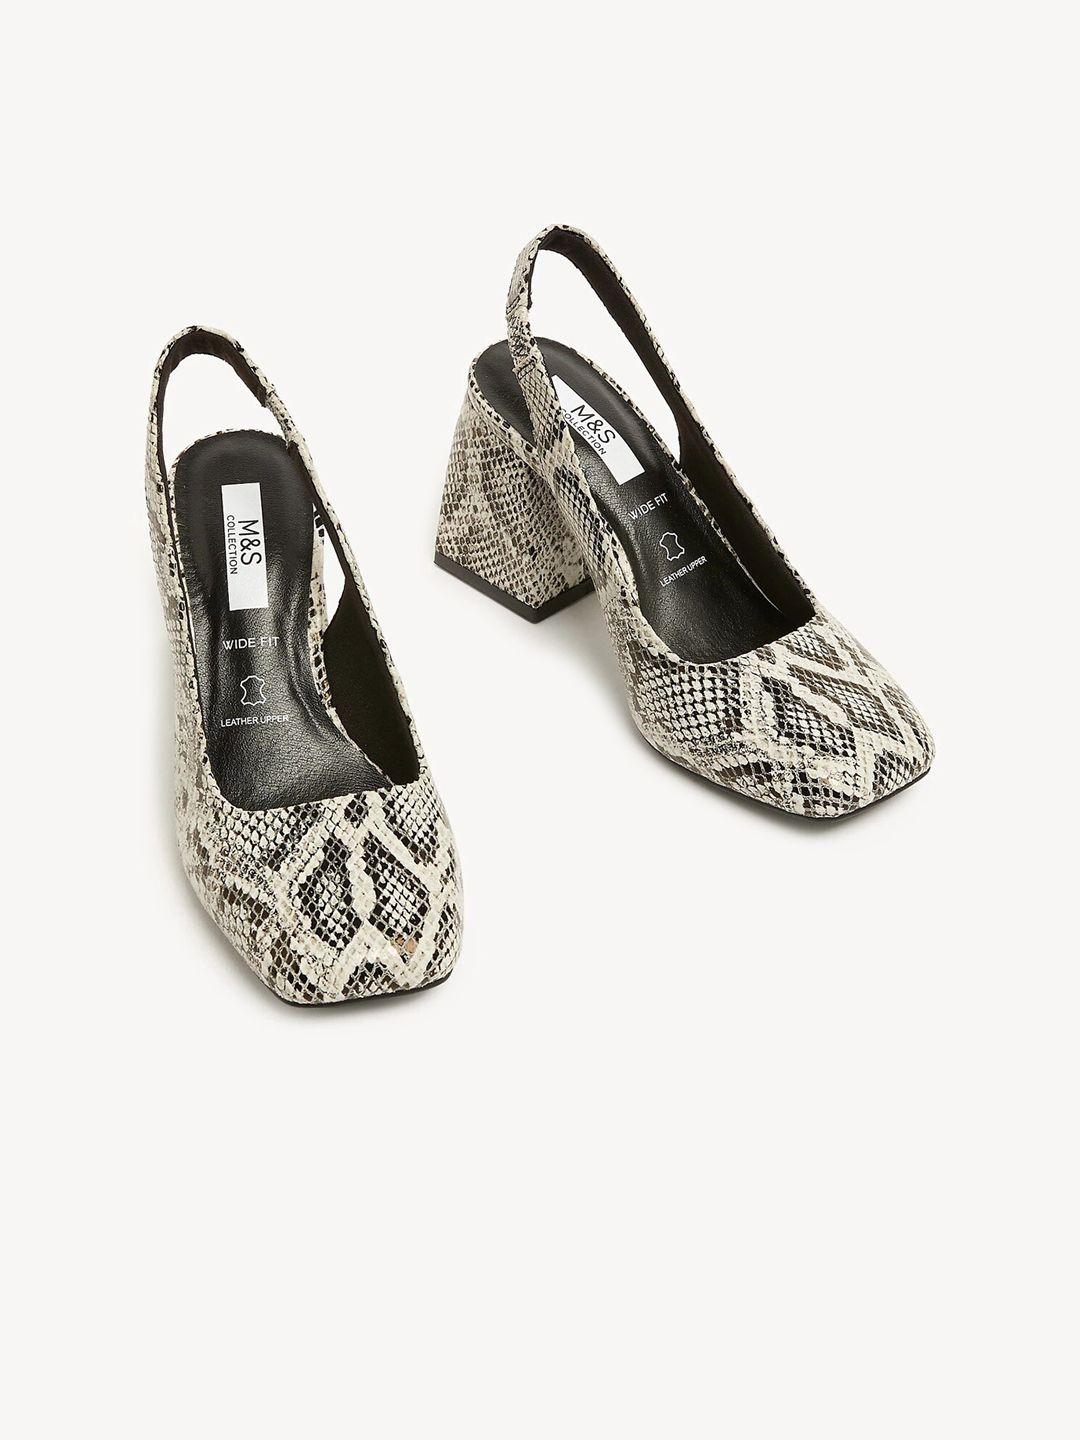 marks-&-spencer-printed-leather-block-heels-pumps